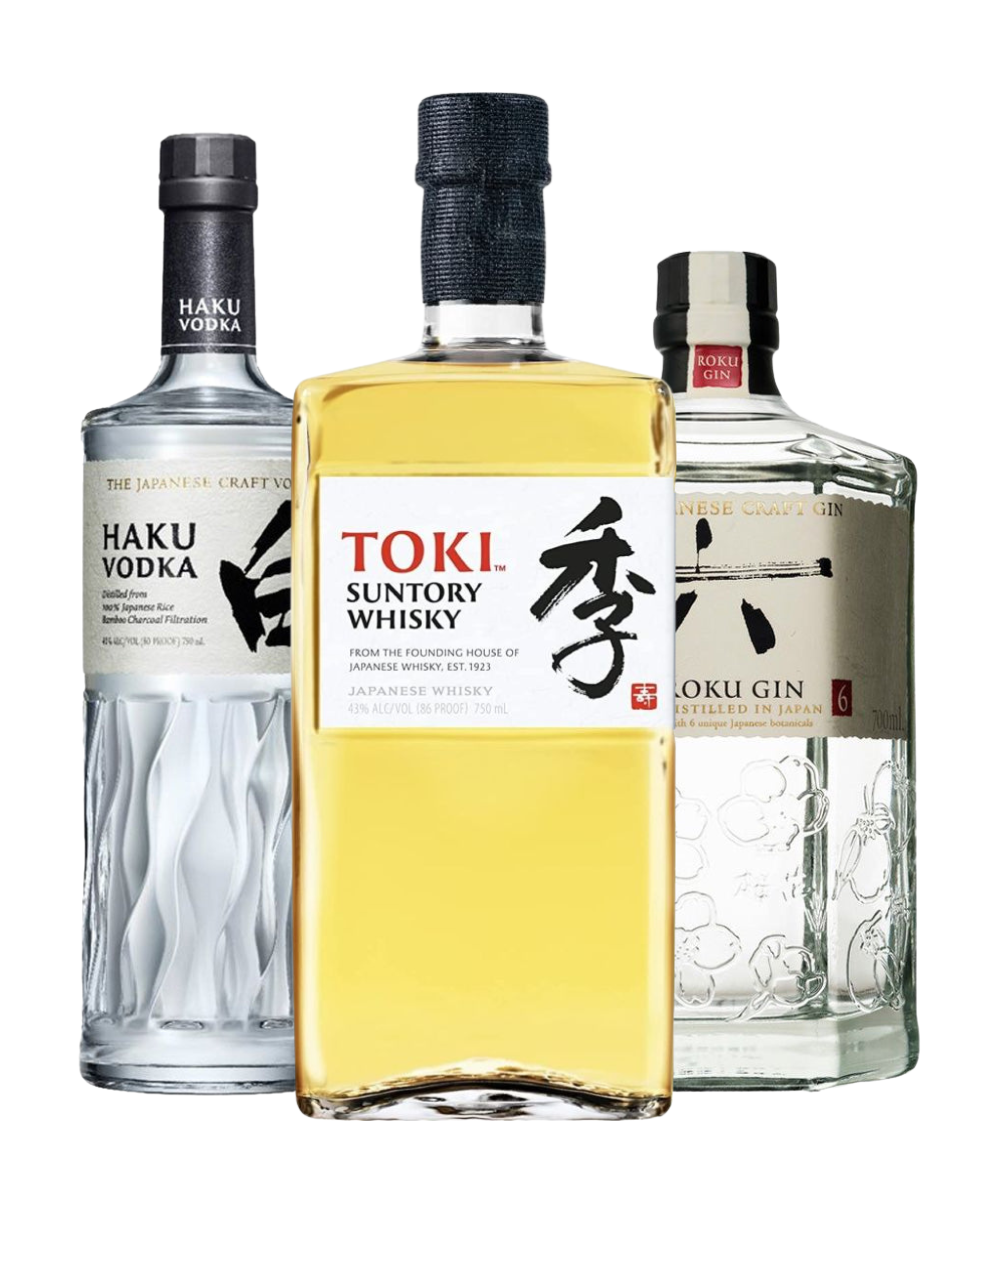 Suntory Whisky Toki with Haku Vodka and Roku Gin | ReserveBar